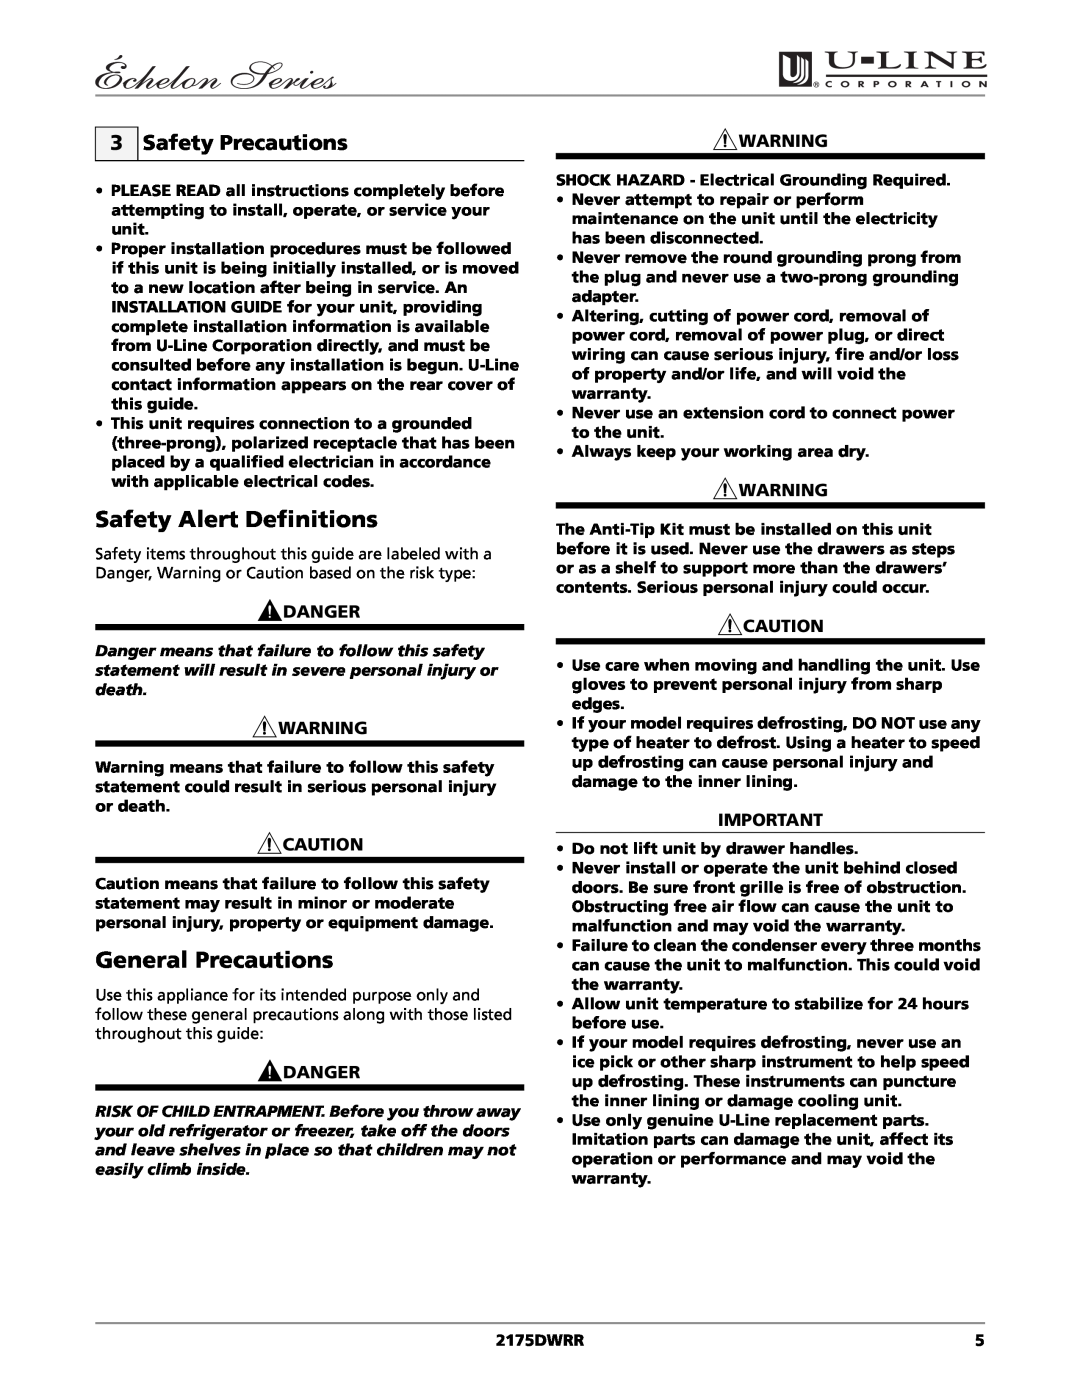 U-Line 2175DWRR manual Safety Alert Definitions, General Precautions, Safety Precautions, Danger 